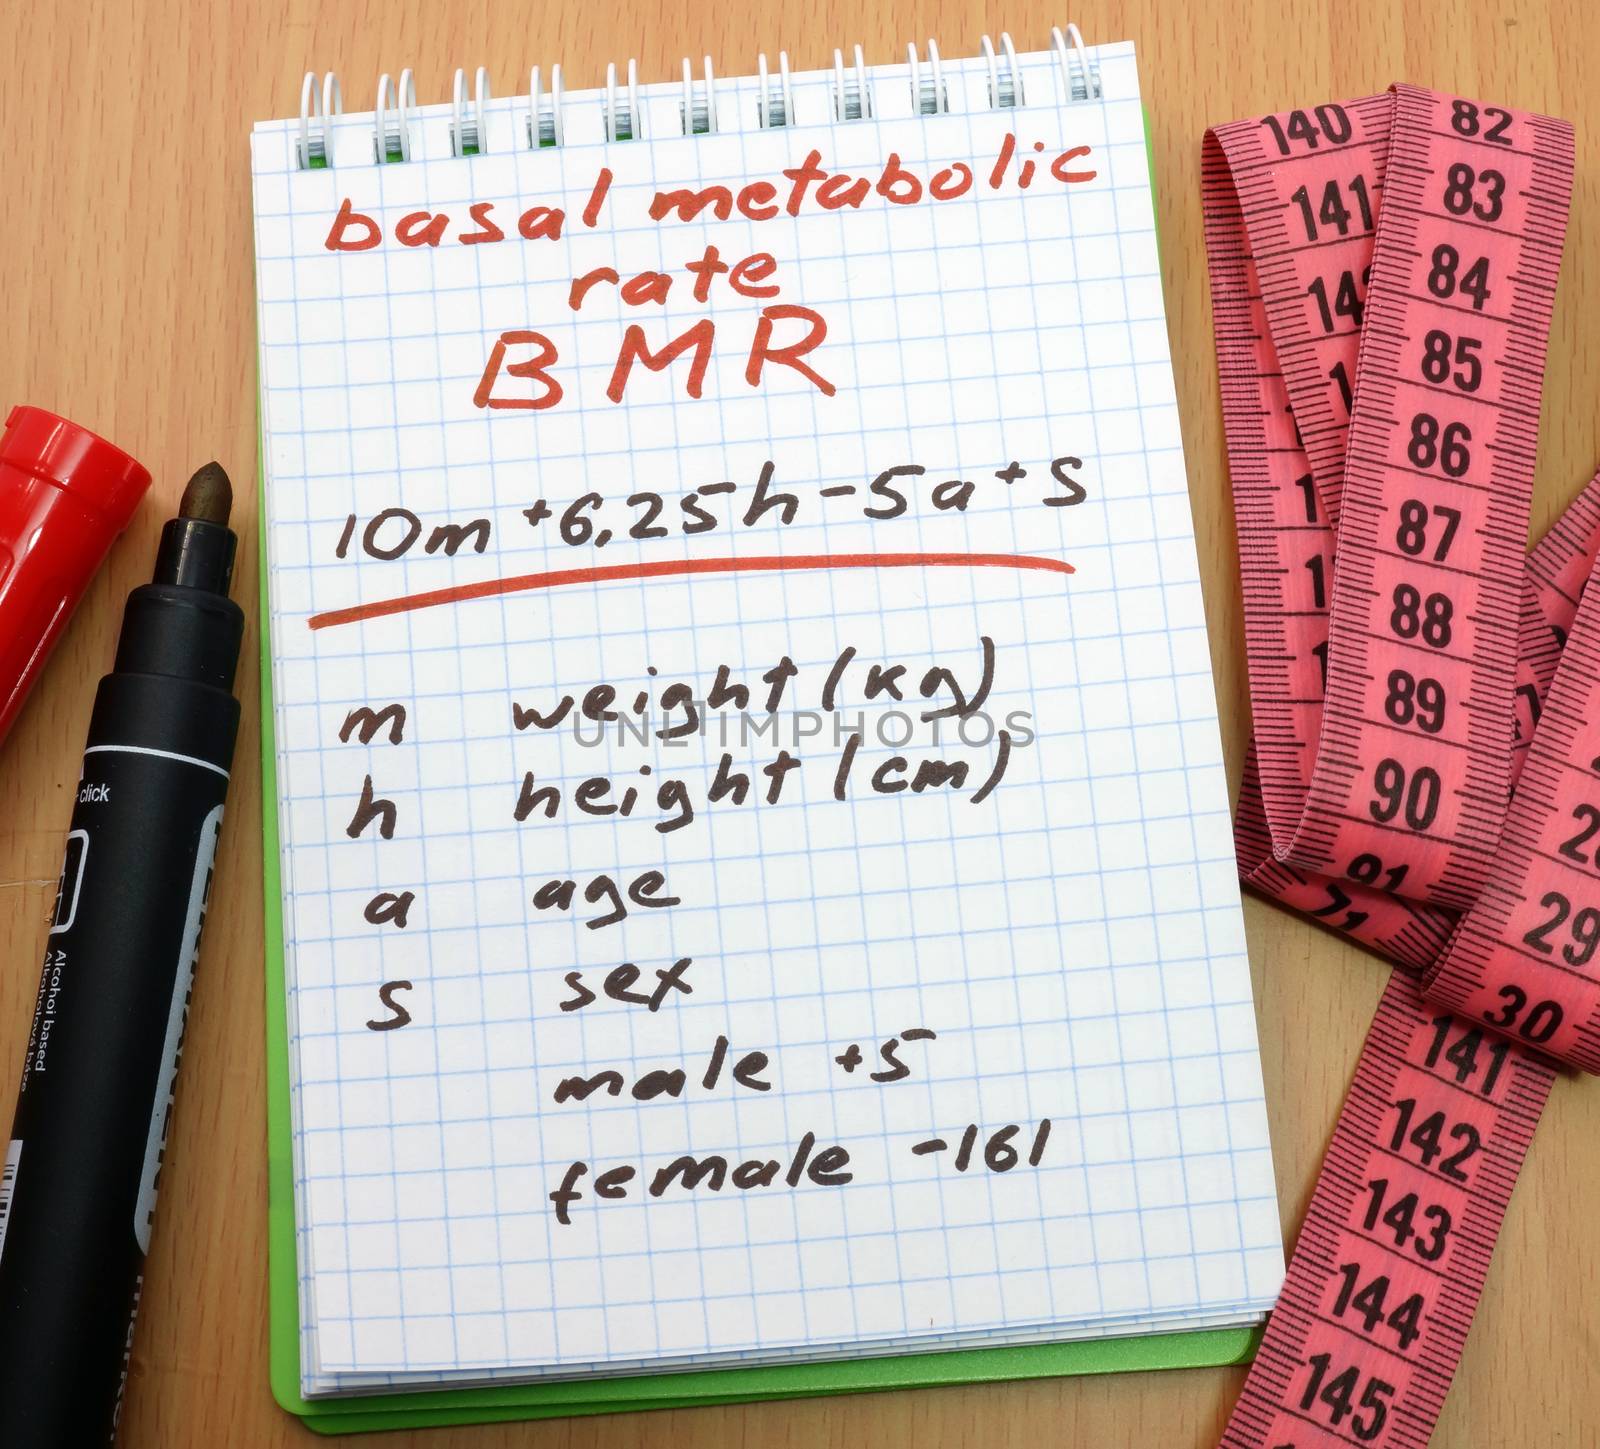 bmr. Basal metabolic rate by designer491